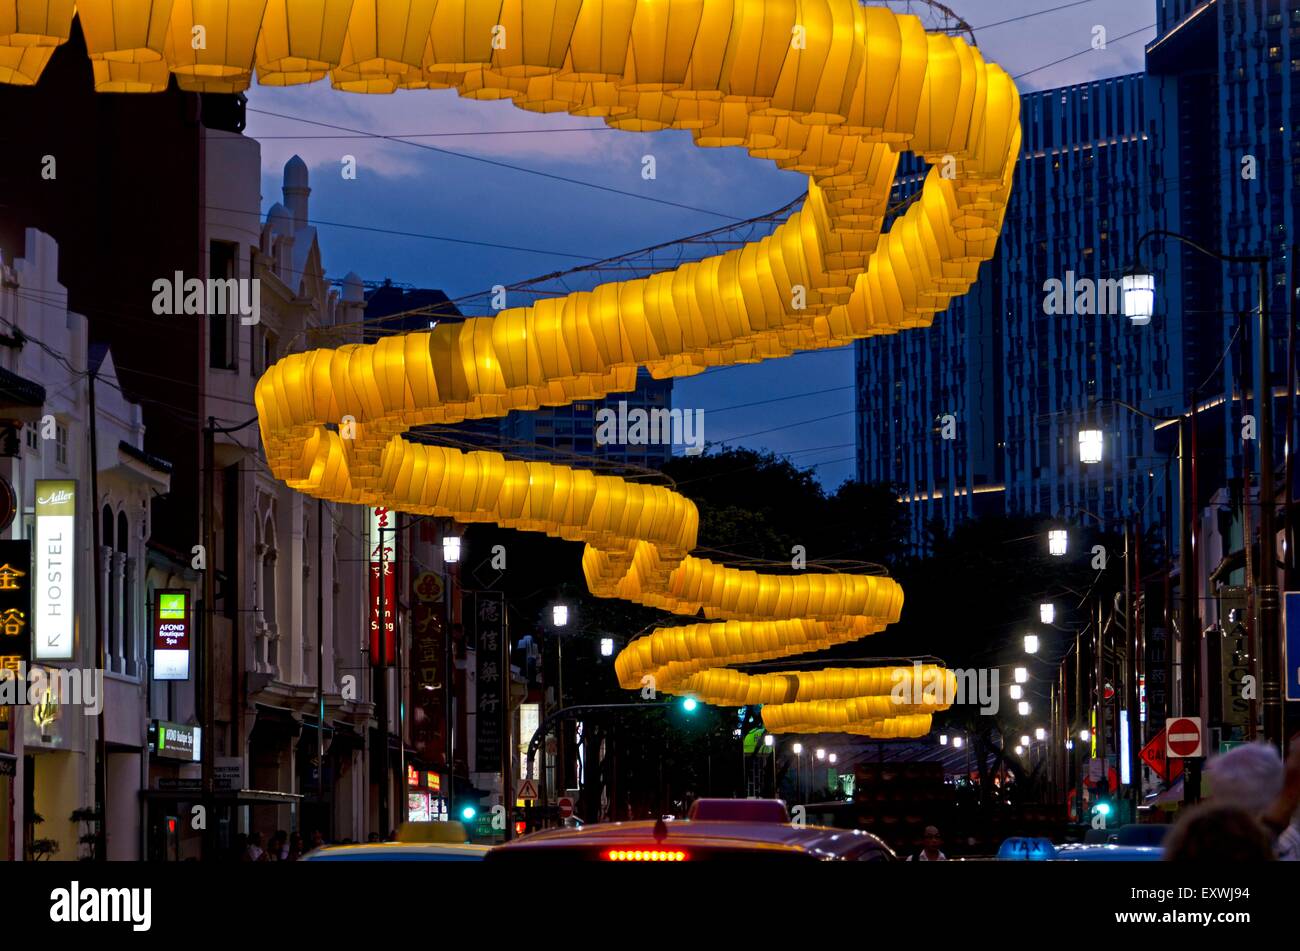 Chain of lights, Chinatown, Singapur City, Singapur, Asia Stock Photo